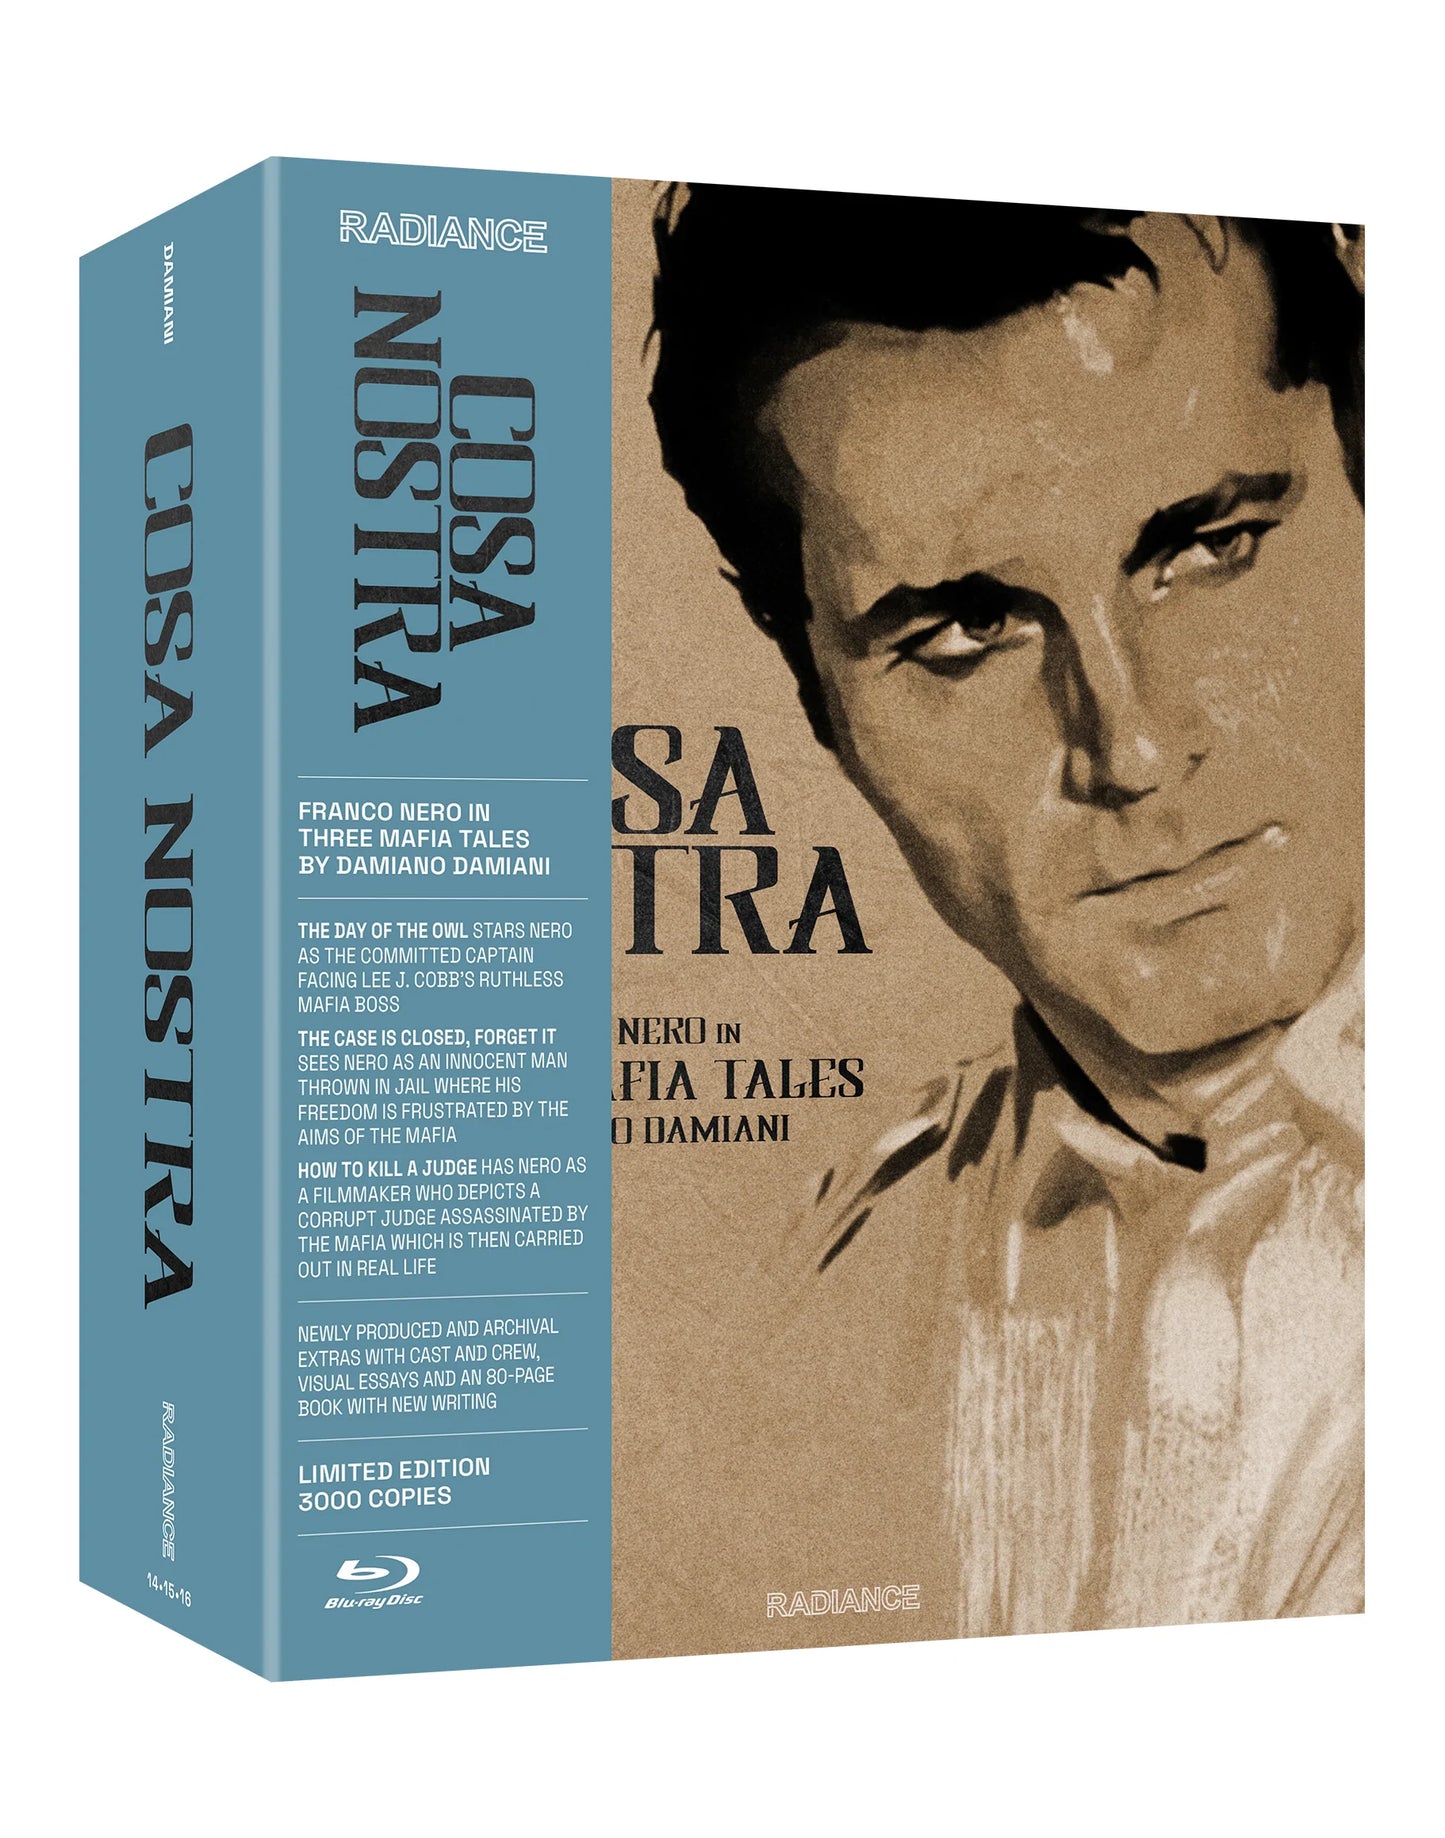 Cosa Nostra: Franco Nero in three Mafia Tales by Damiano Damiani Limited Edition Radiance Films Blu-Ray Box Set [NEW]